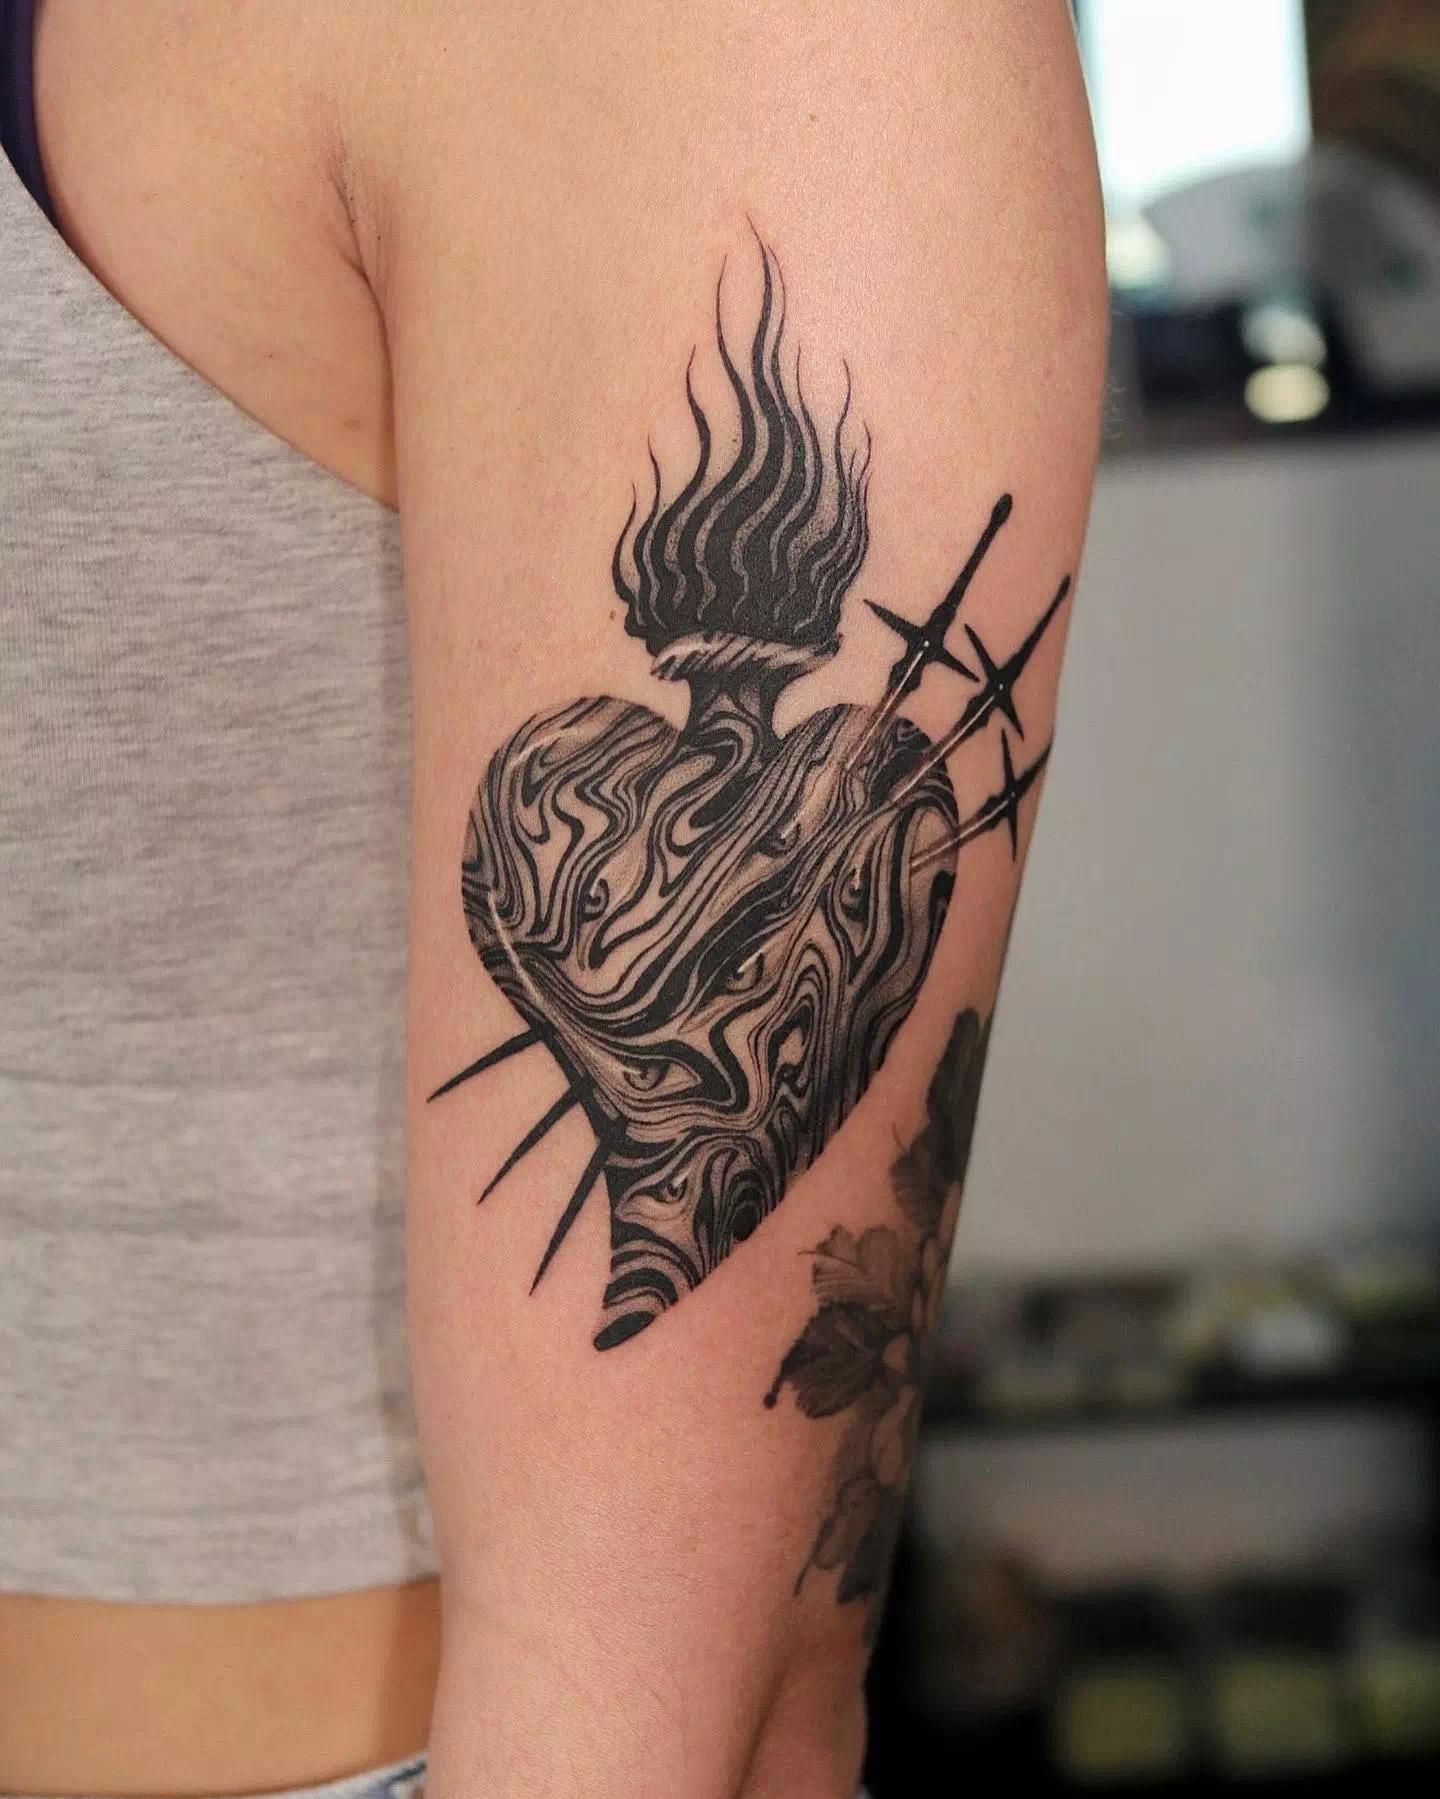 Leg Heart Tattoo With A Fire Symbol